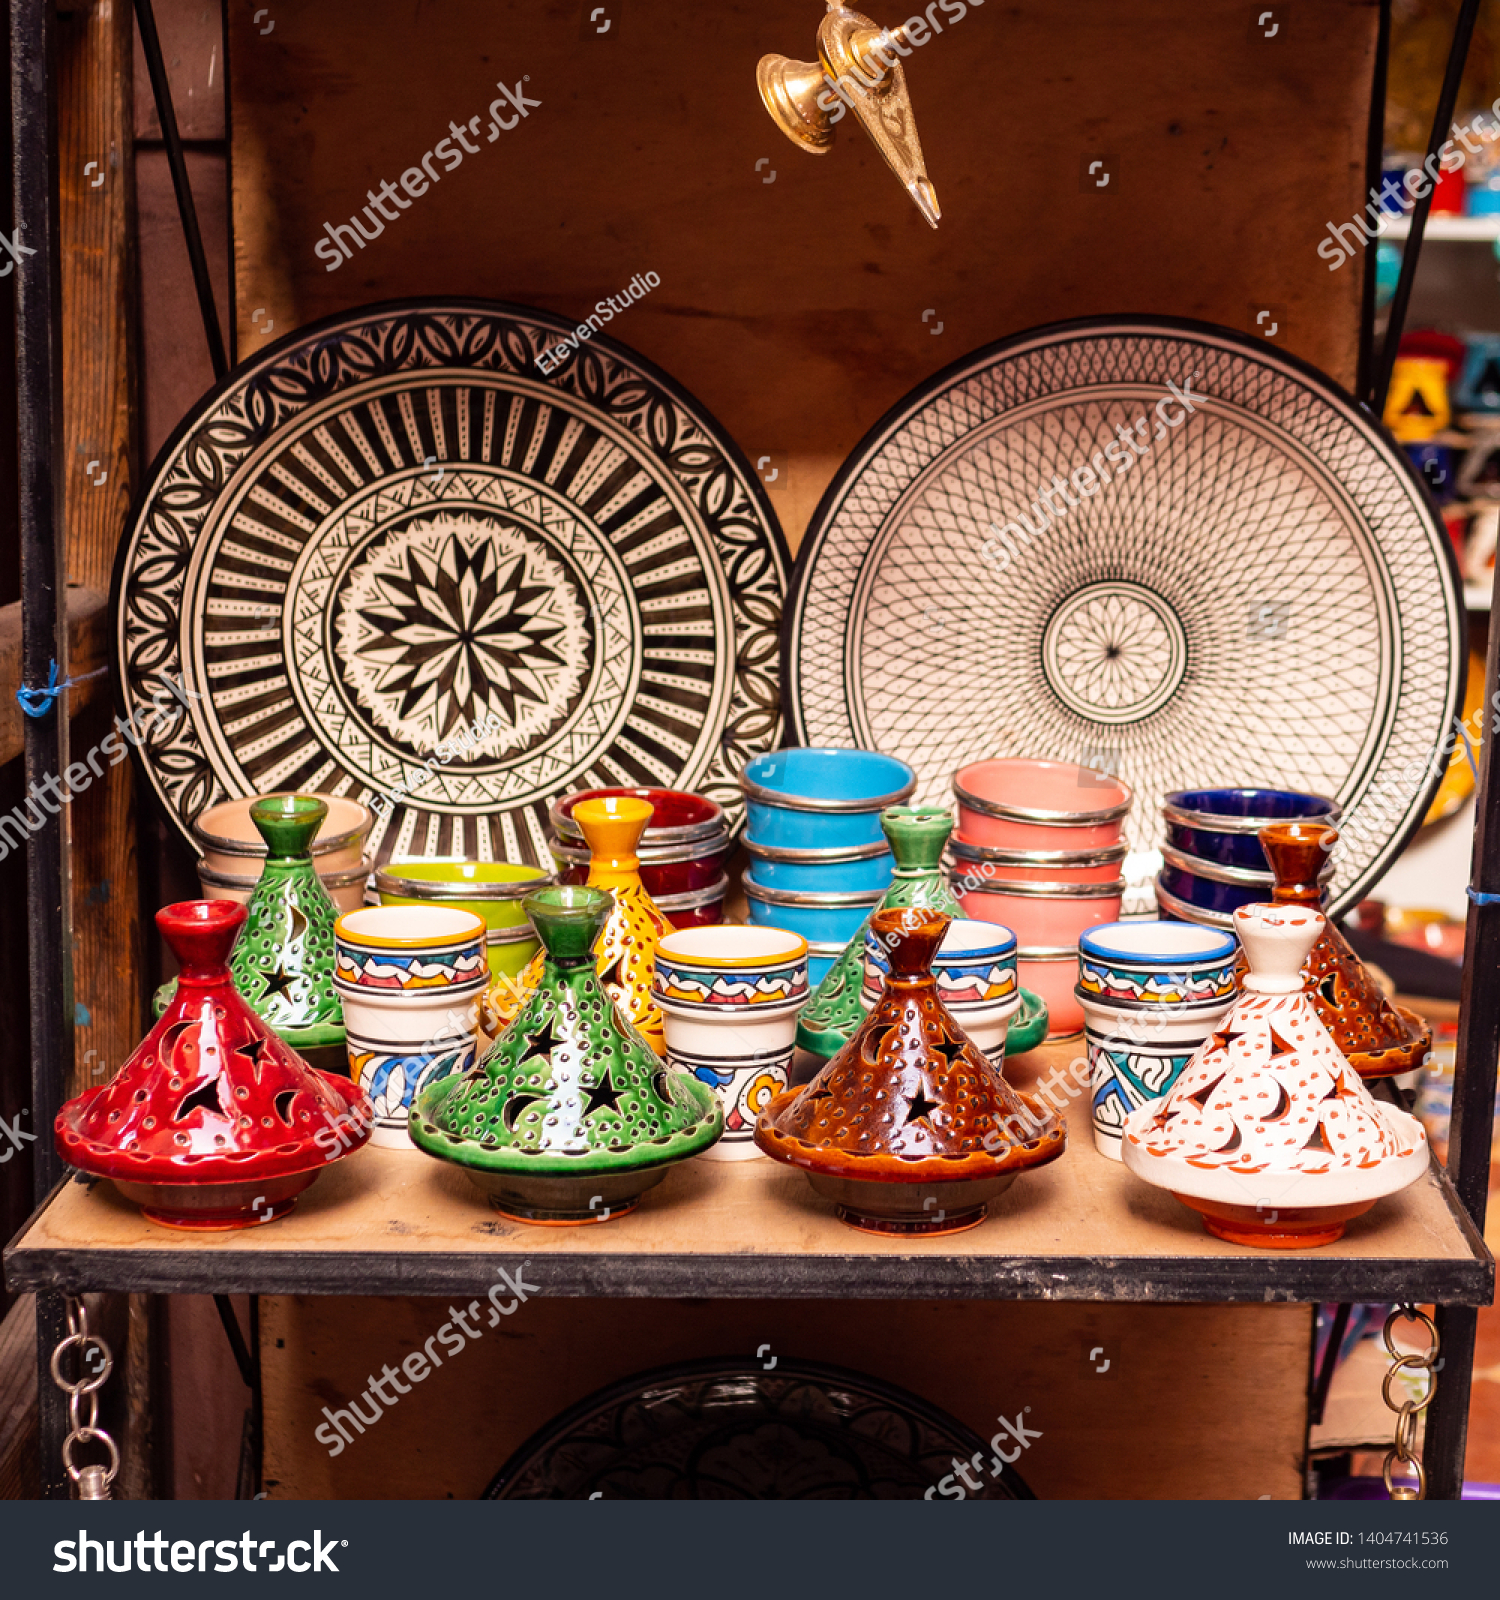 Traditional Moroccan marrakech market with plates and tajin tagine. Handmade ceramic plates. Arabian colorful ramadan design #1404741536